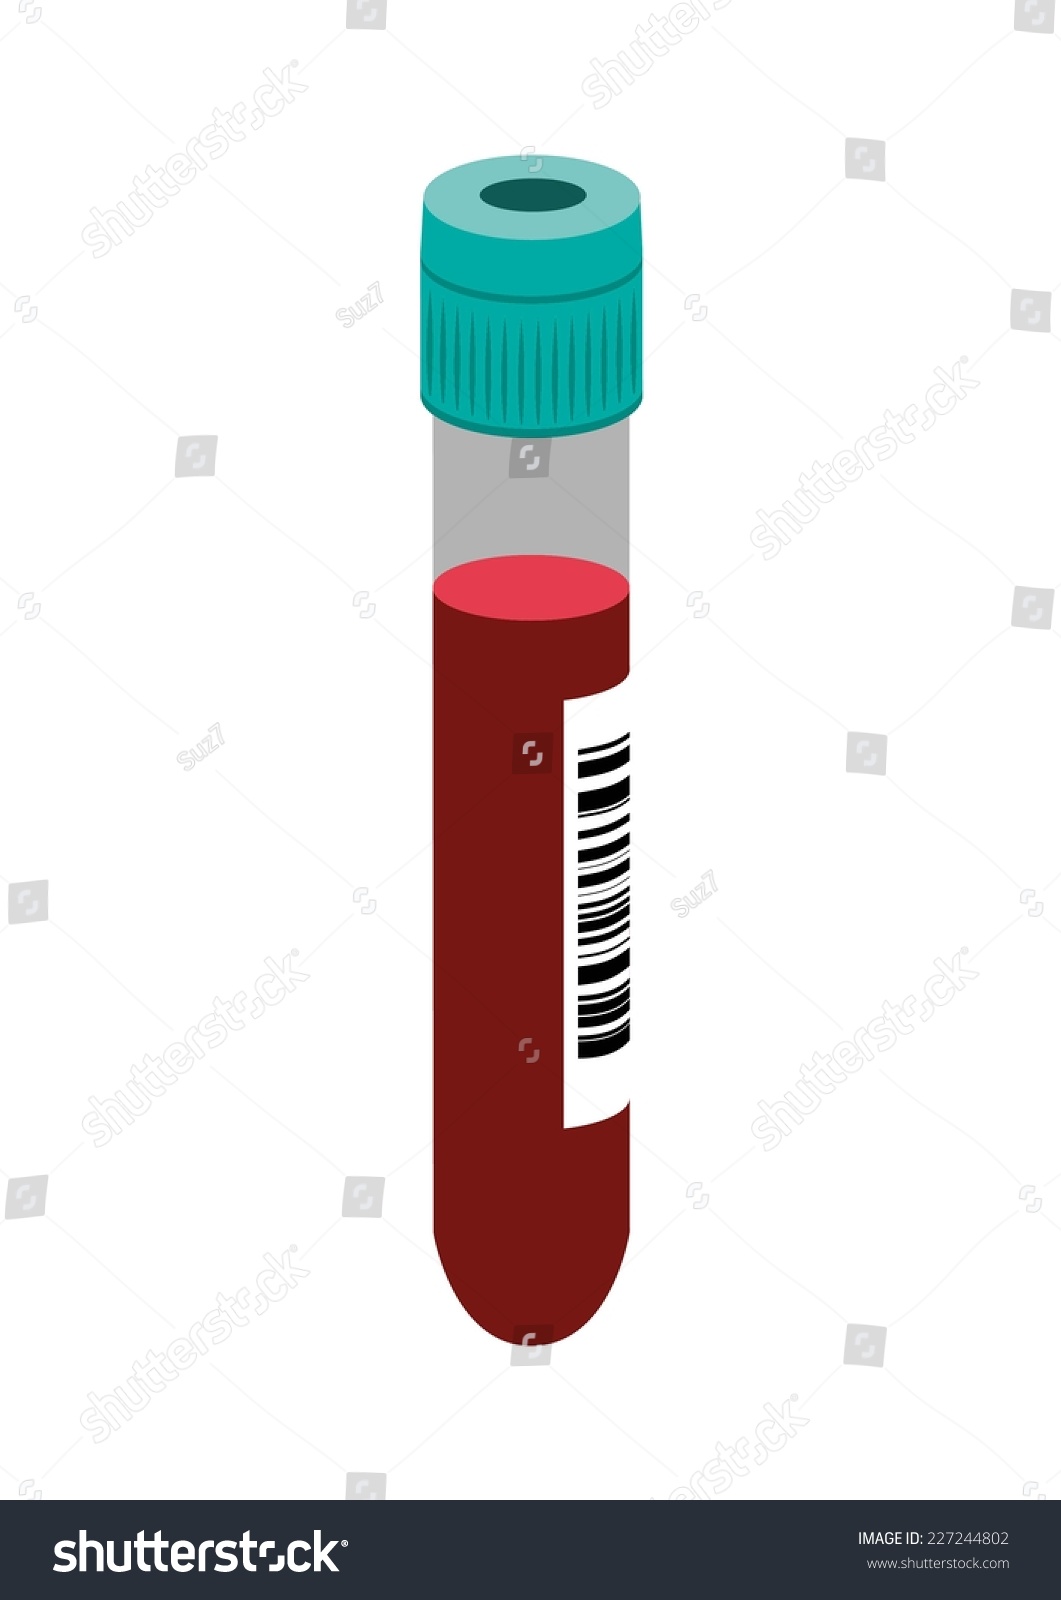 clipart blood vial - photo #4